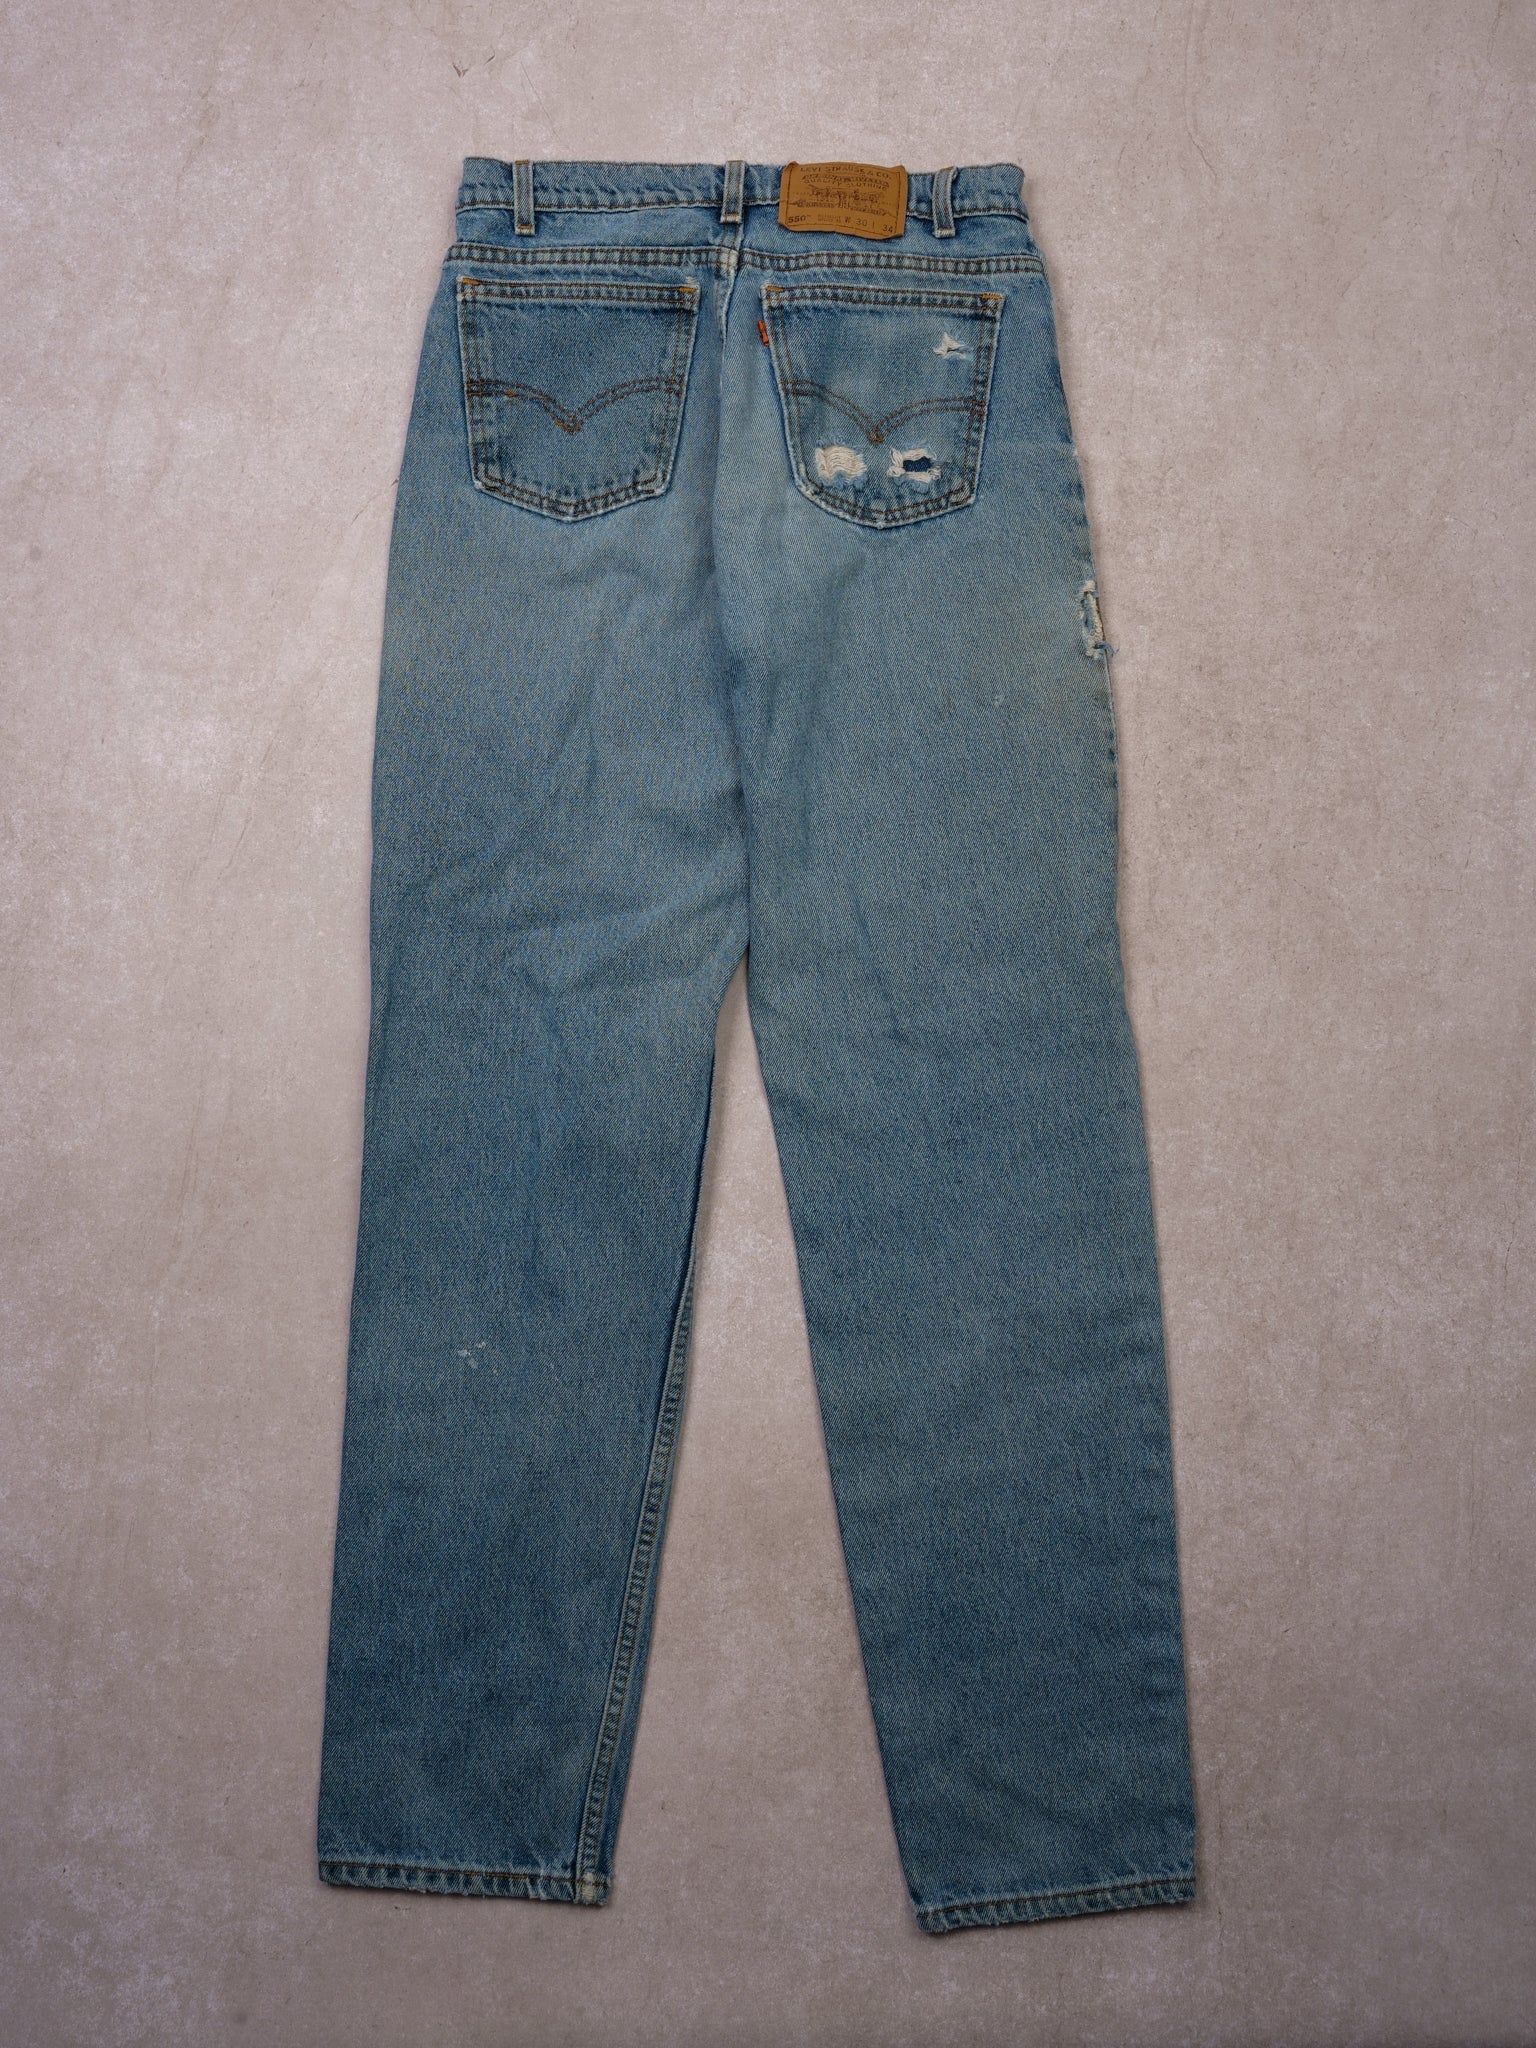 Vintage 90s Light Distressed Wash Levi's 550 Relax Fit Tappered Leg Denim Jean (28x32)